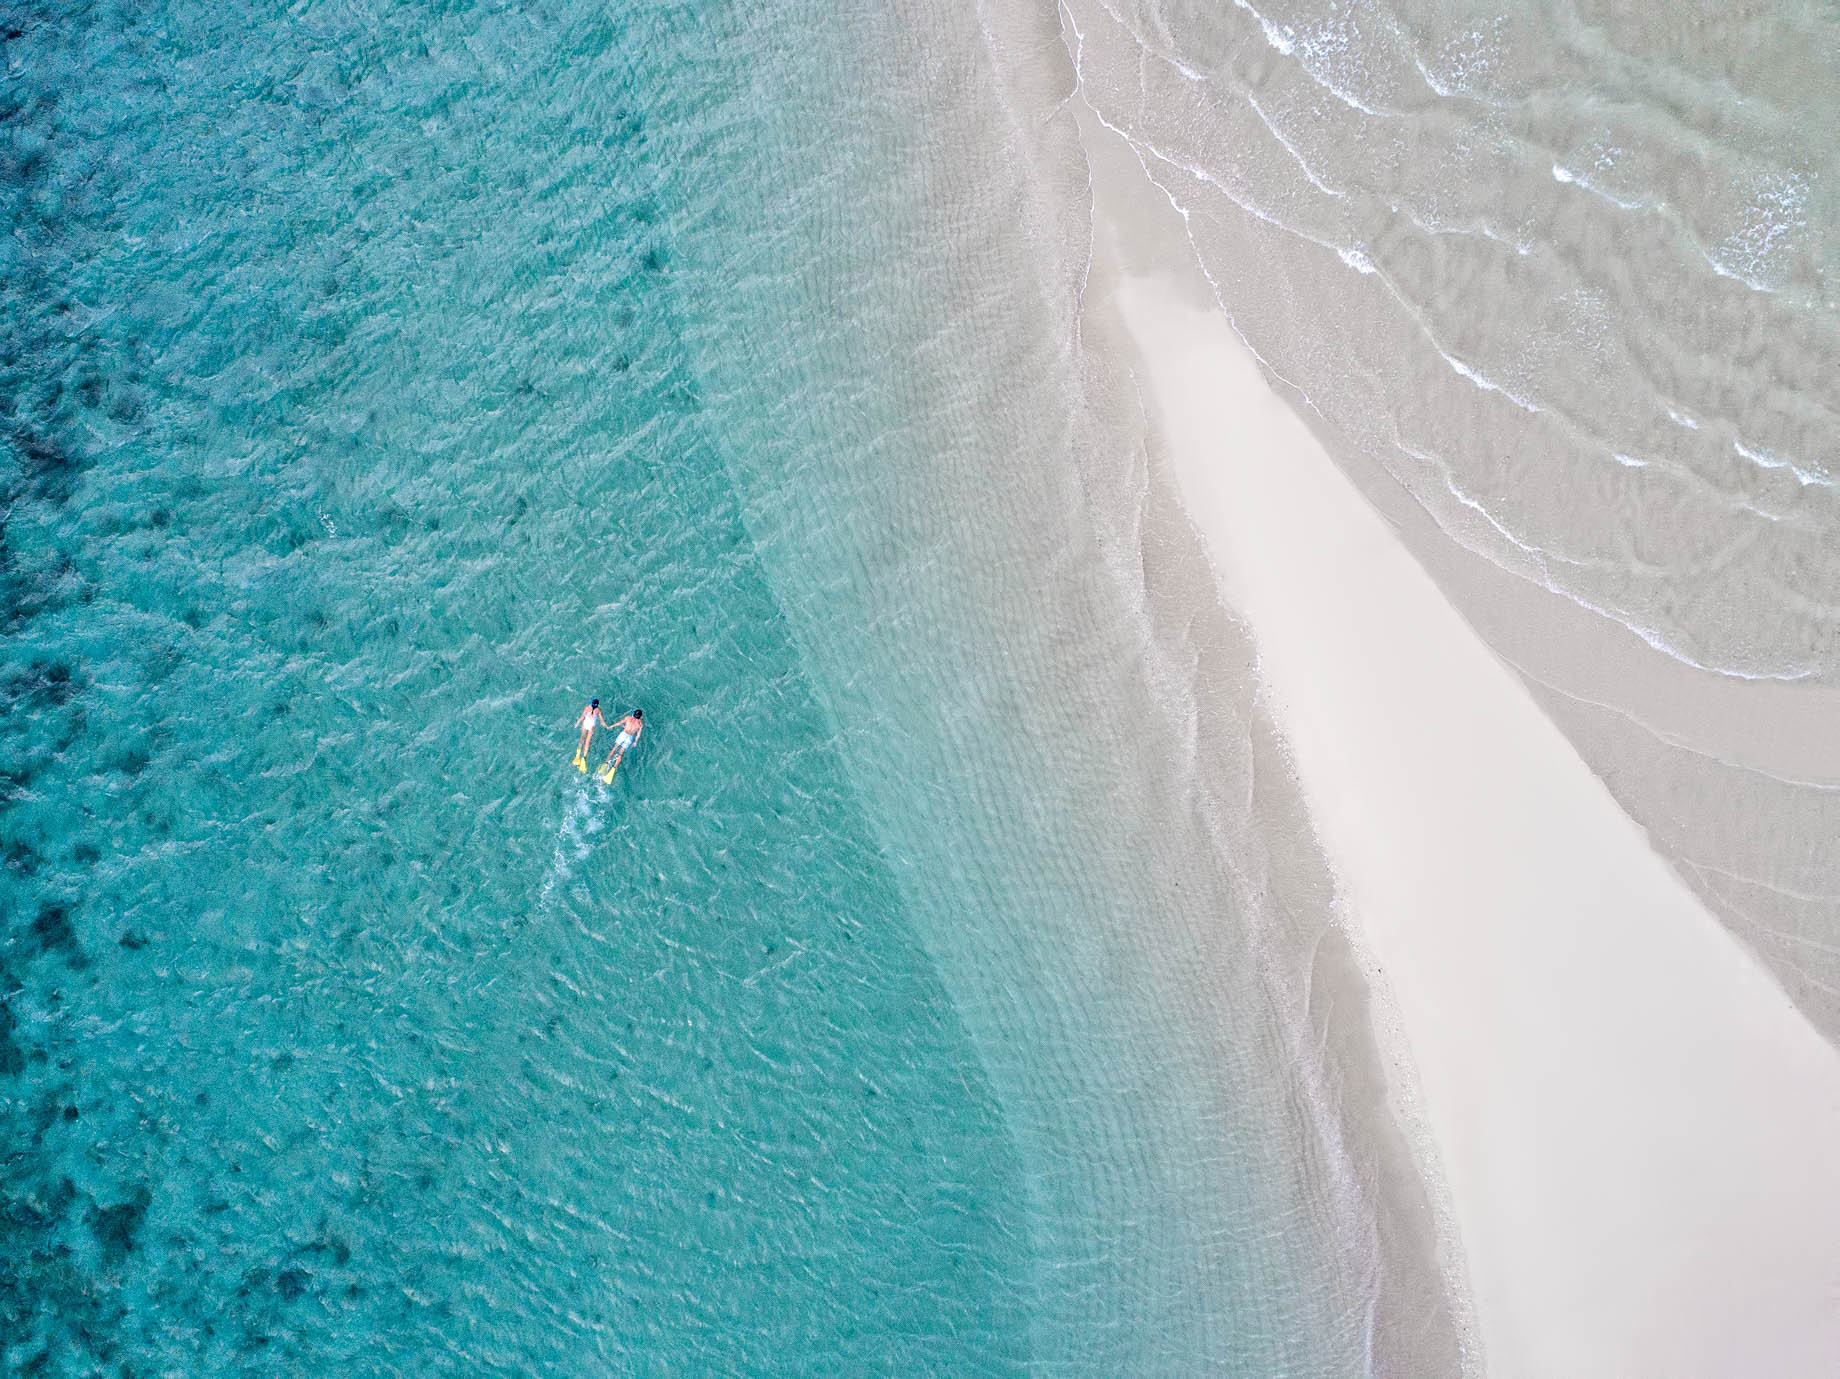 InterContinental Hayman Island Resort – Whitsunday Islands, Australia – Snorkel Tour